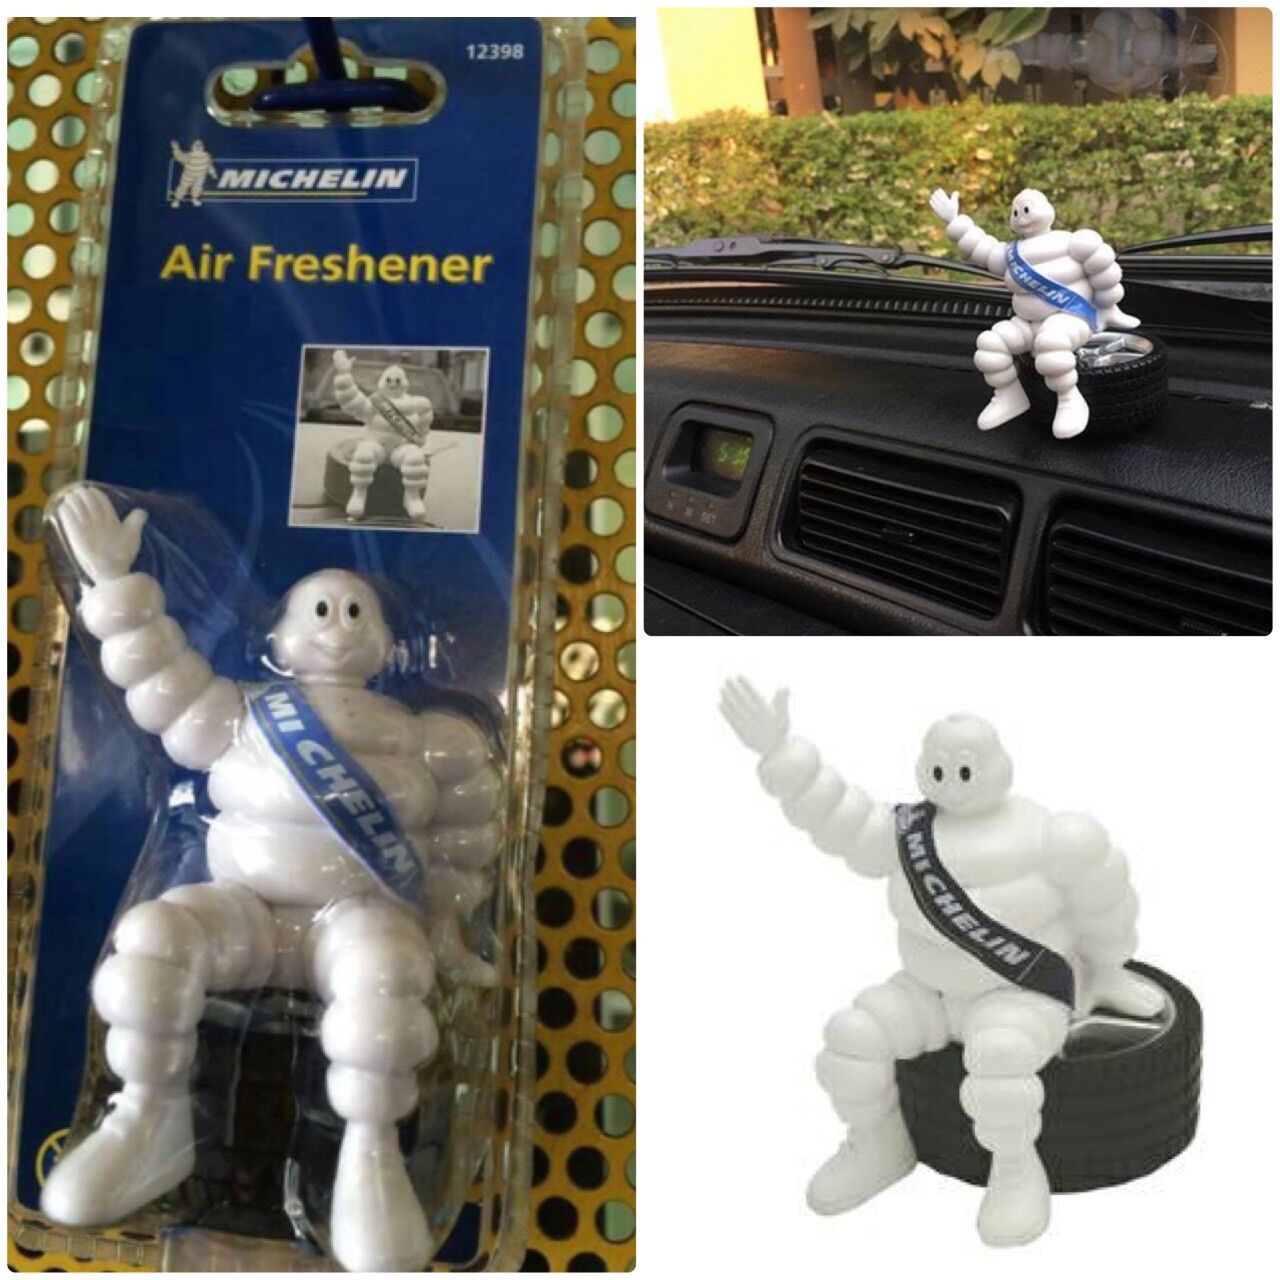 MICHELIN Man Doll Collectible BIBENDUM Figure Sit on Tyre 4"  Air Freshener Car Michelin